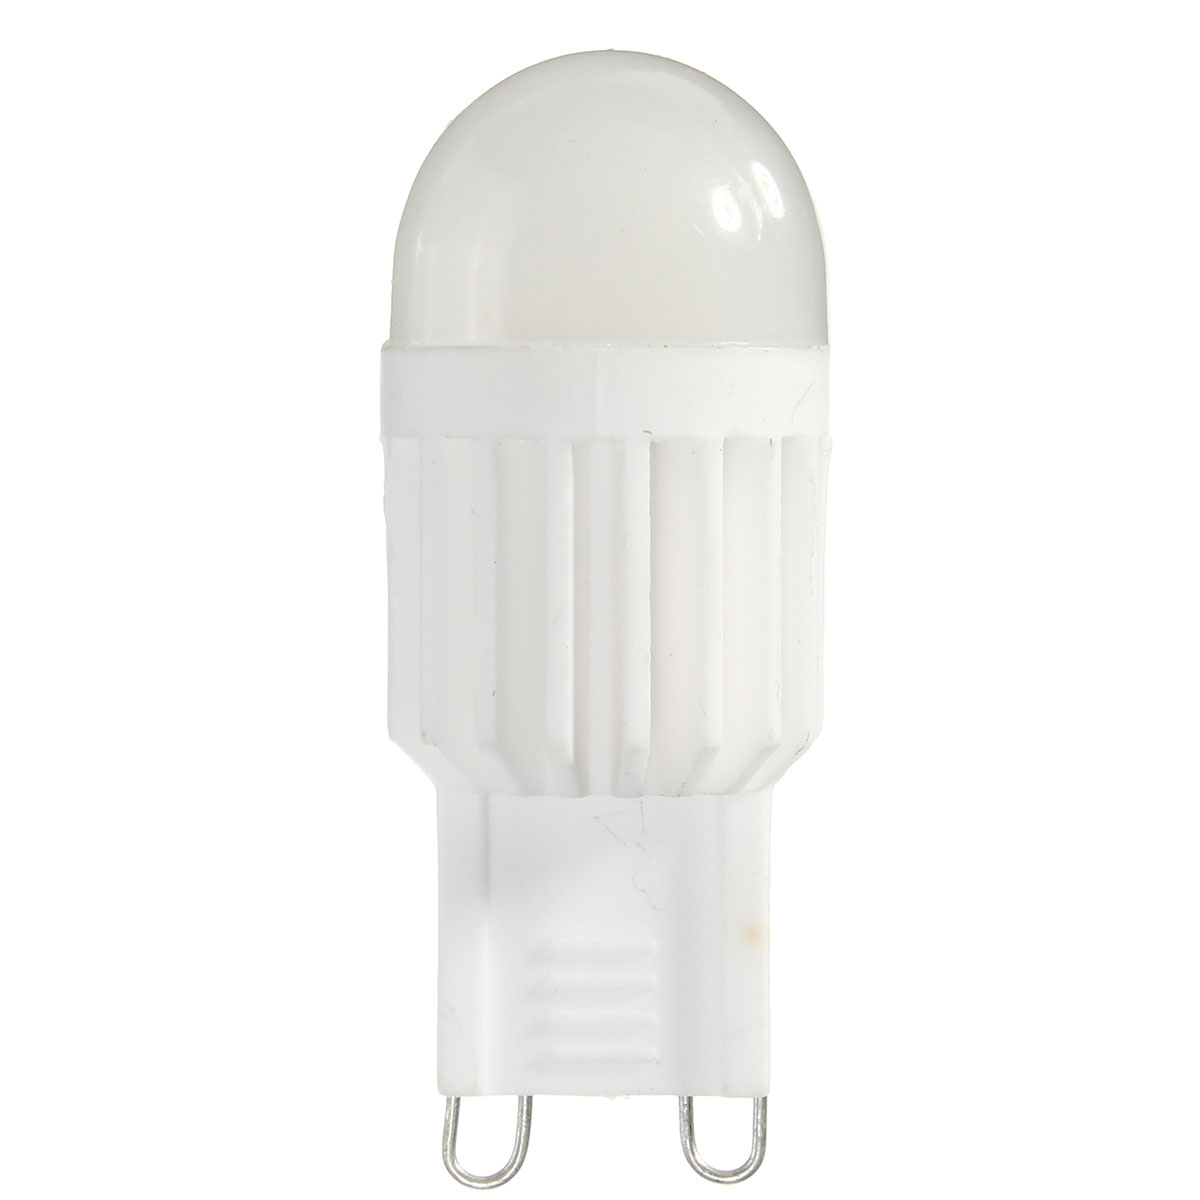 

Дроссельные G9 2.5W 230LM керамика LED початка теплый белый натуральный белый свет лампы лампы AC110V / 220v